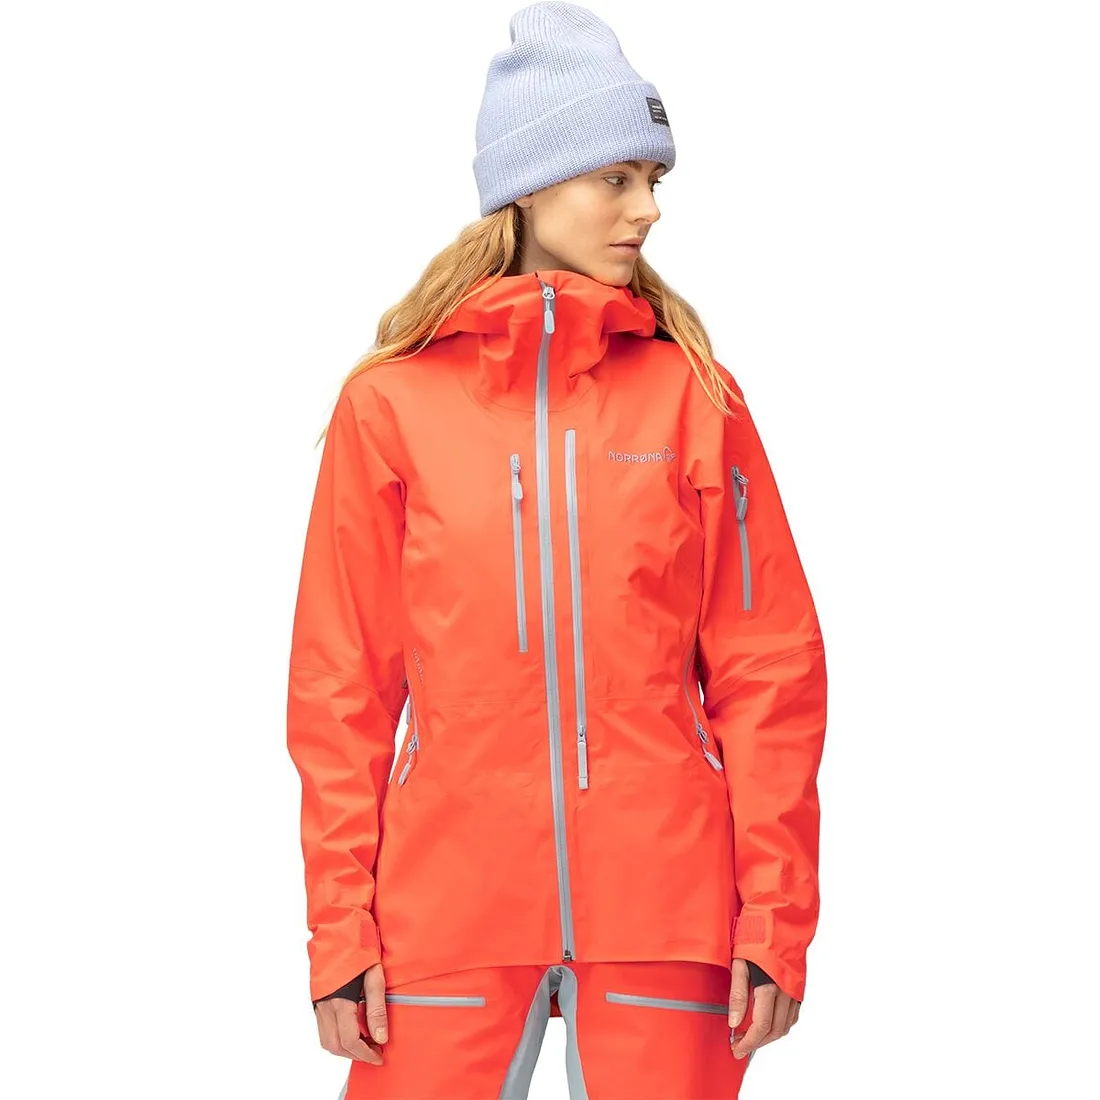 Norrona Lofoten Gore-Tex Pro Jacket Women's Ski Jacket